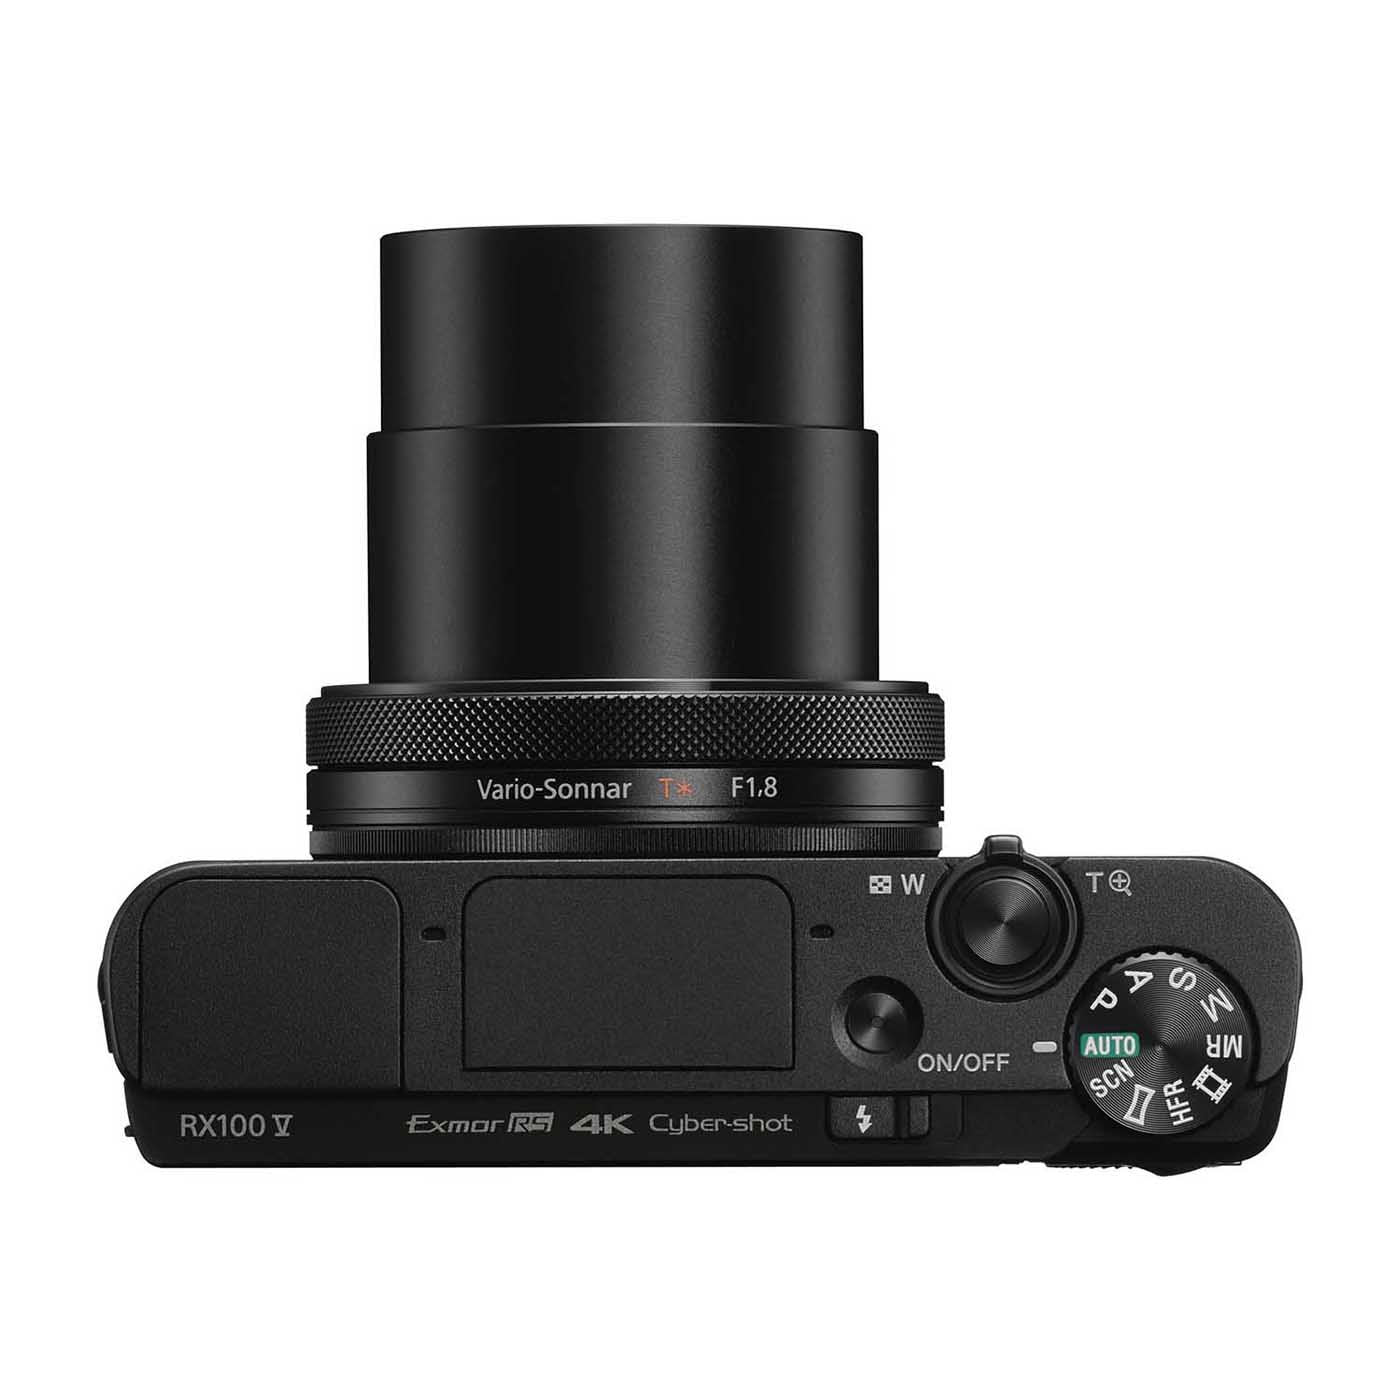 Sony DSC-RX100M5A Premium 1.0-type Sensor Compact Camera